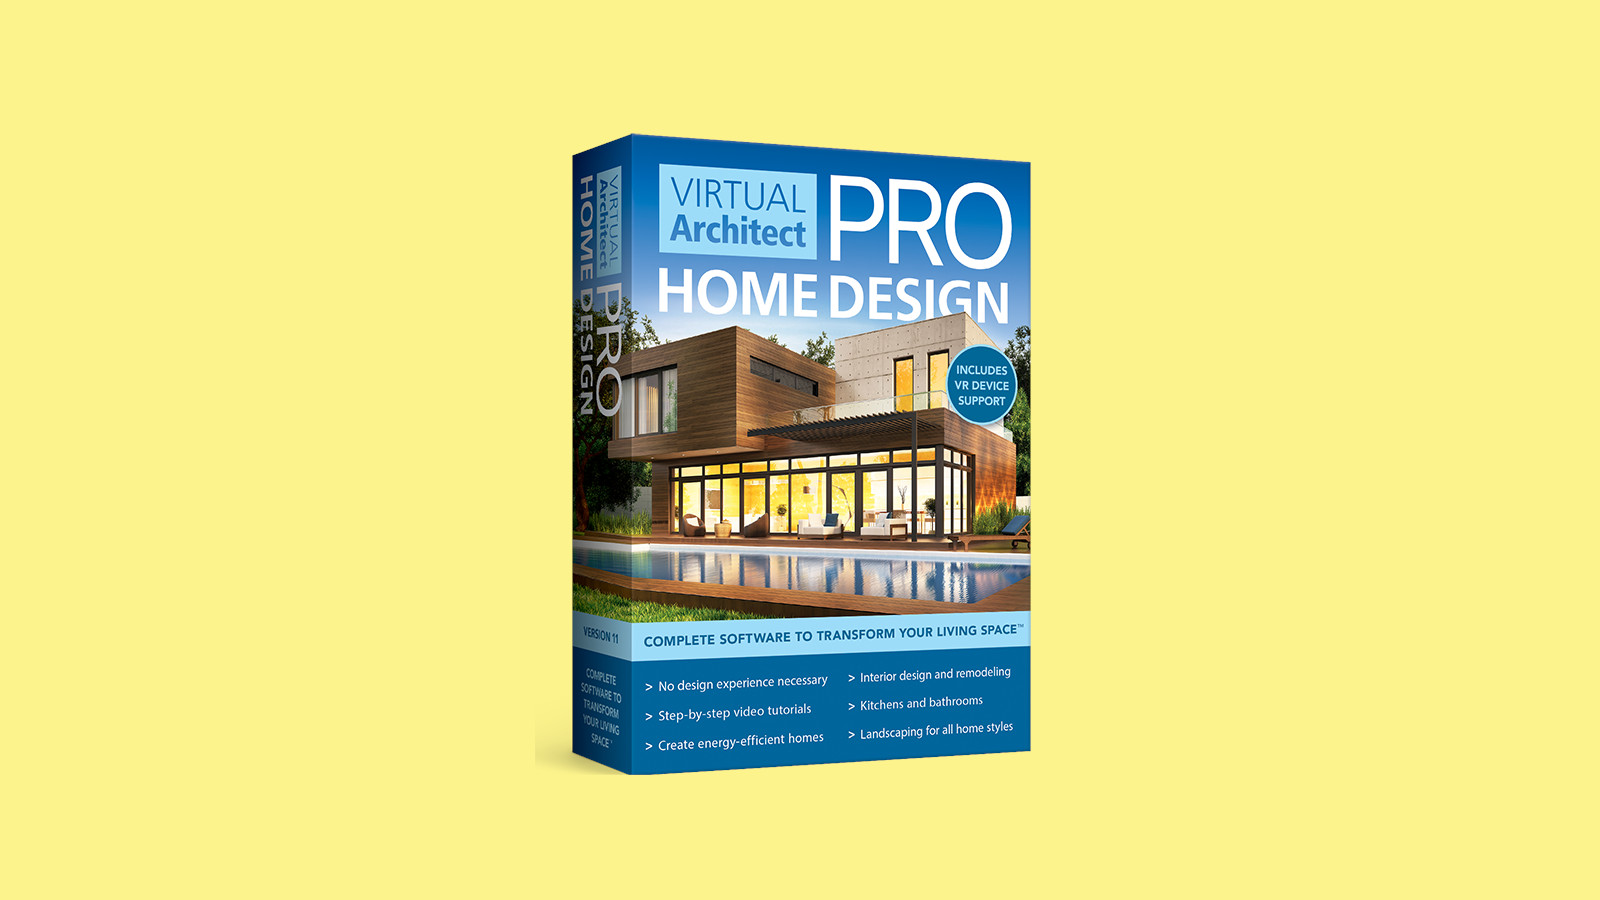 Virtual Architect Professional Home Design 11 CD Key 258.03 USD